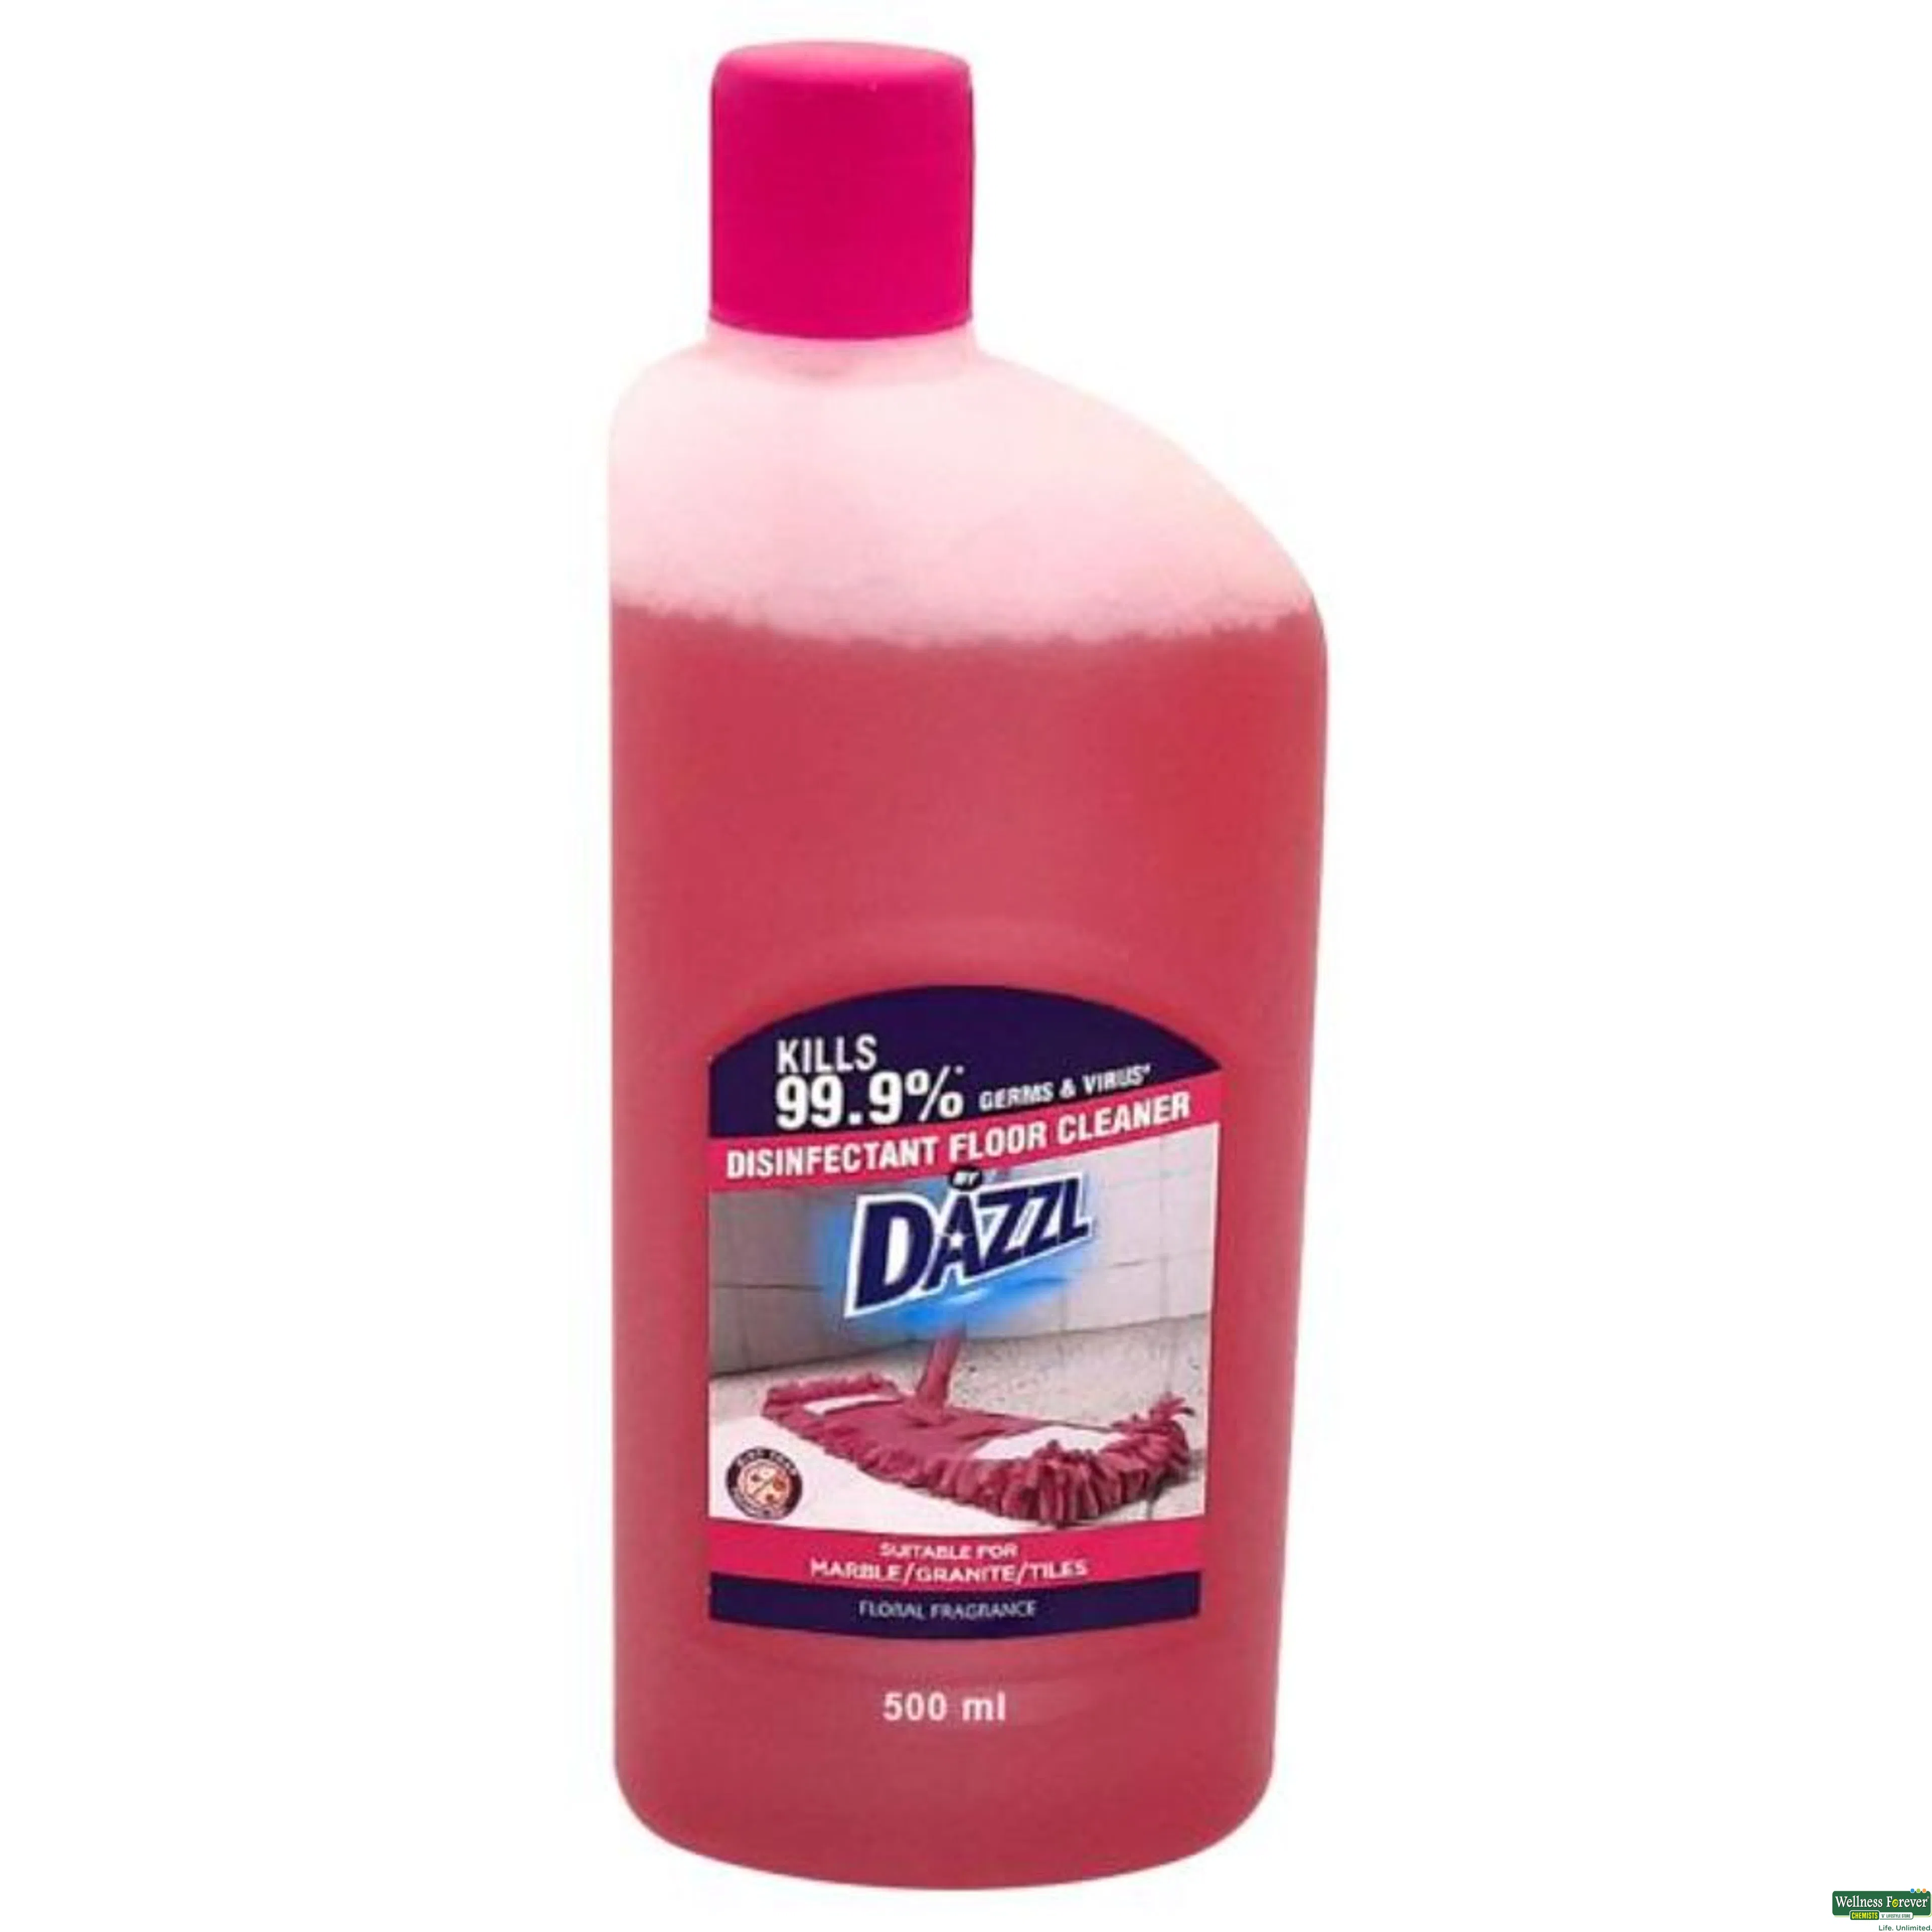 DAZZL DISINFECTANT FLOOR CLEANER 500ML-image